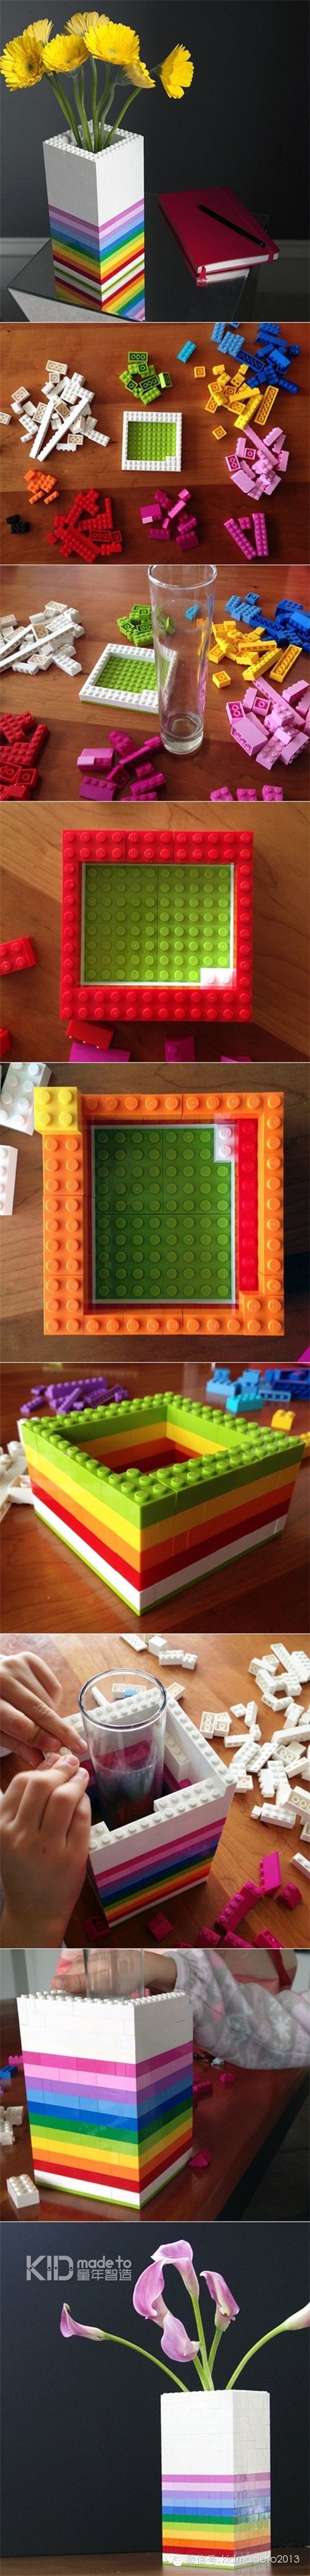 creative-lego-crafts9